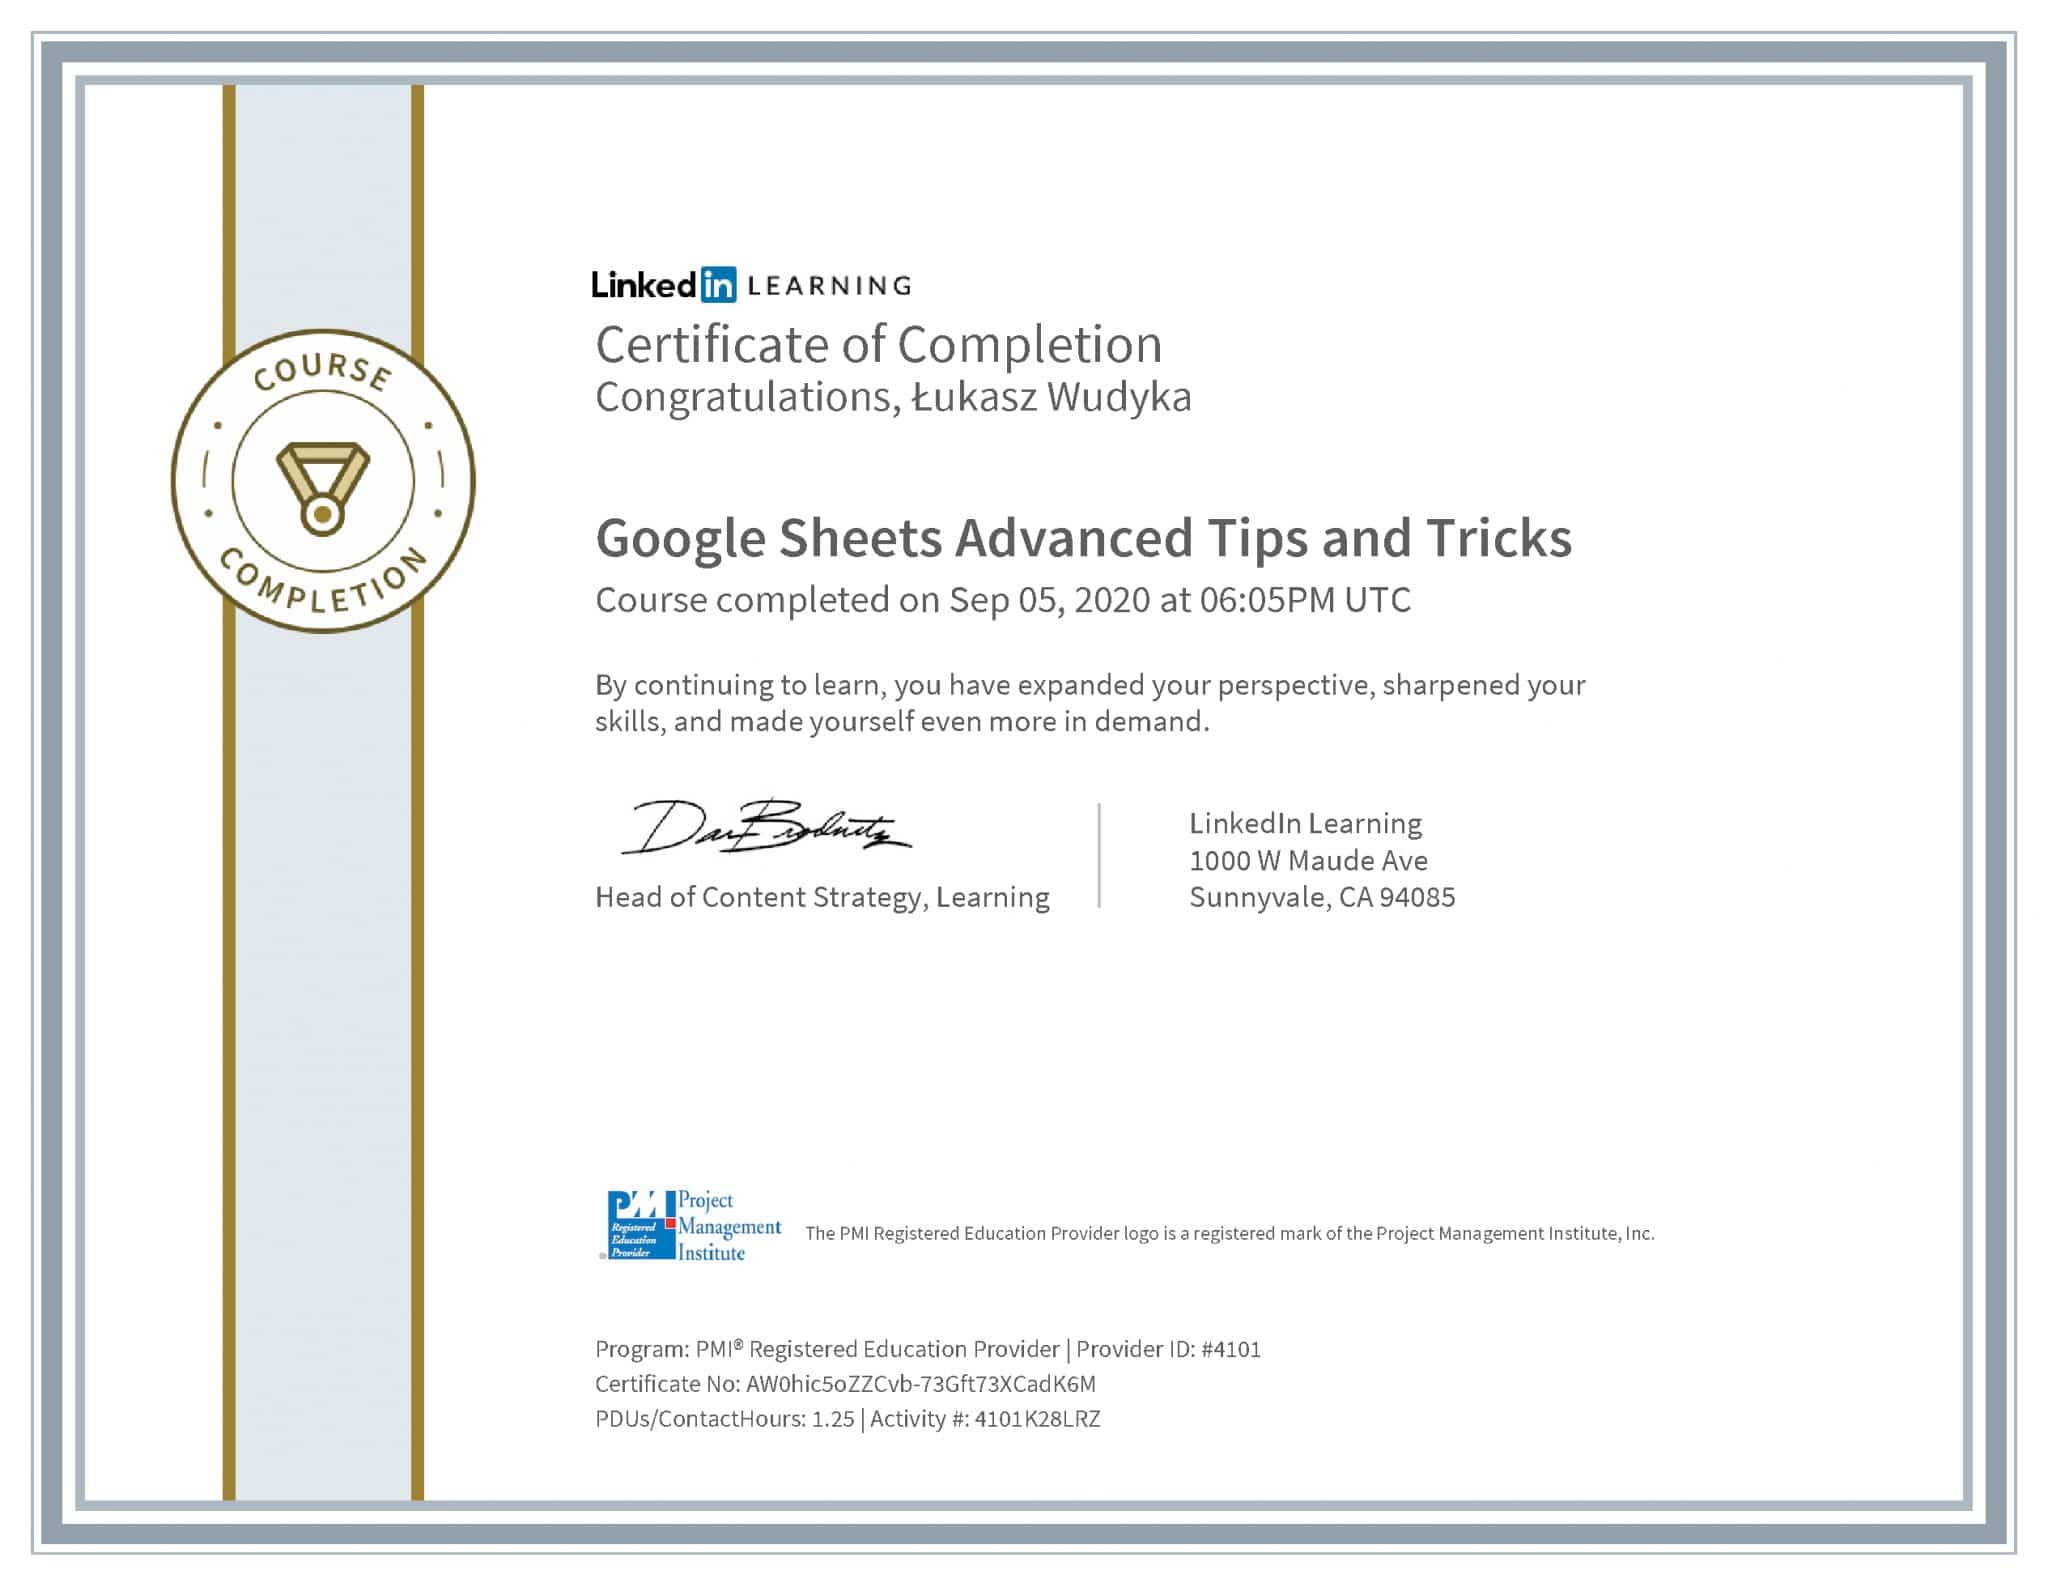 Łukasz Wudyka certyfikat LinkedIn Google Sheets Advanced Tips nad Tricks PMI